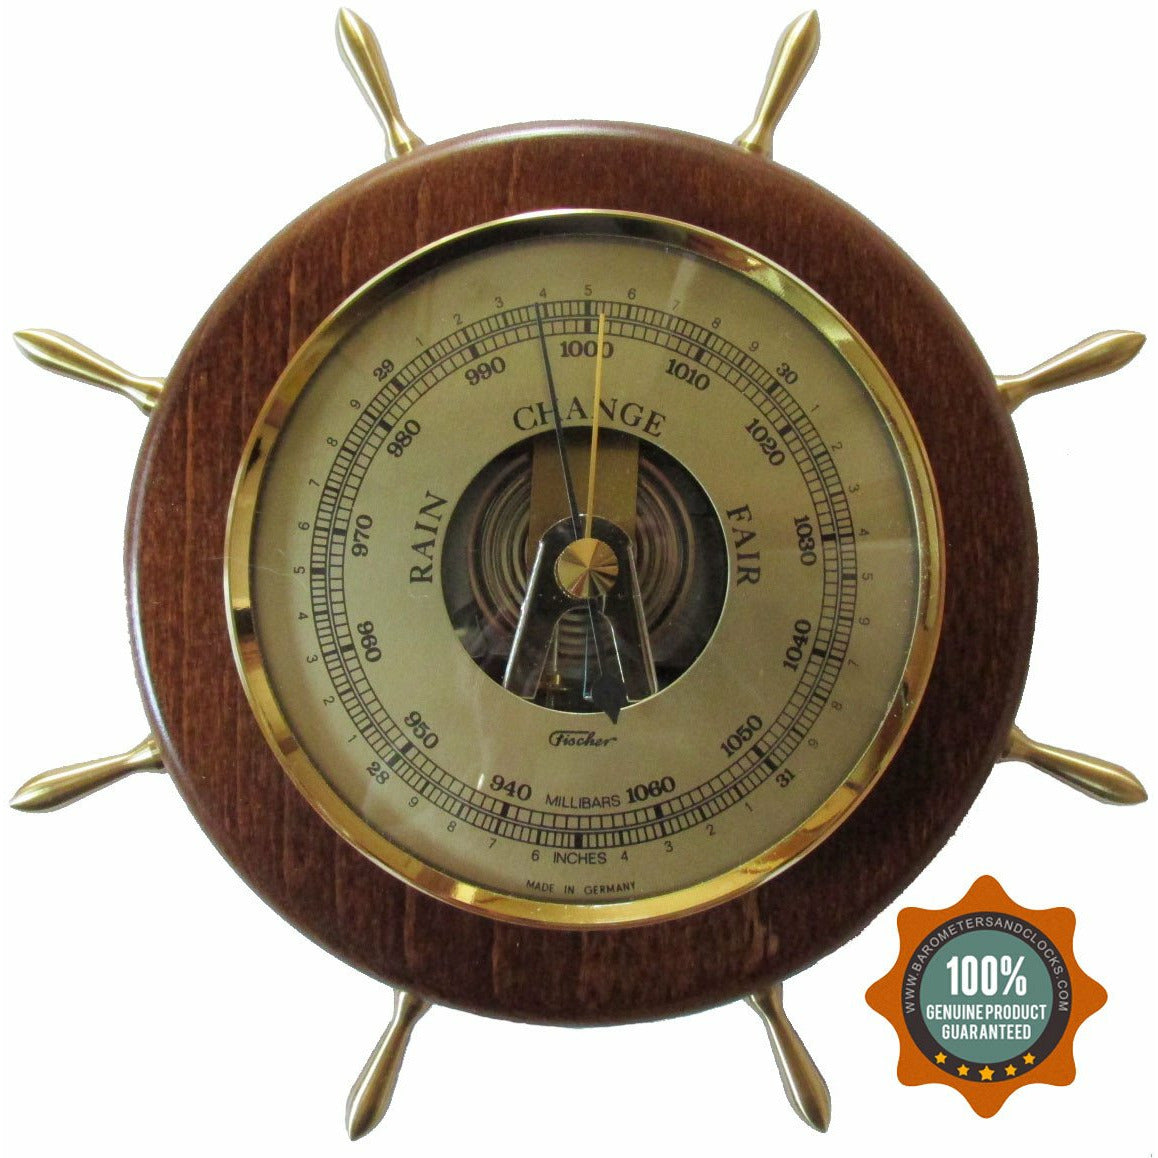 Ships Wheel Barometer